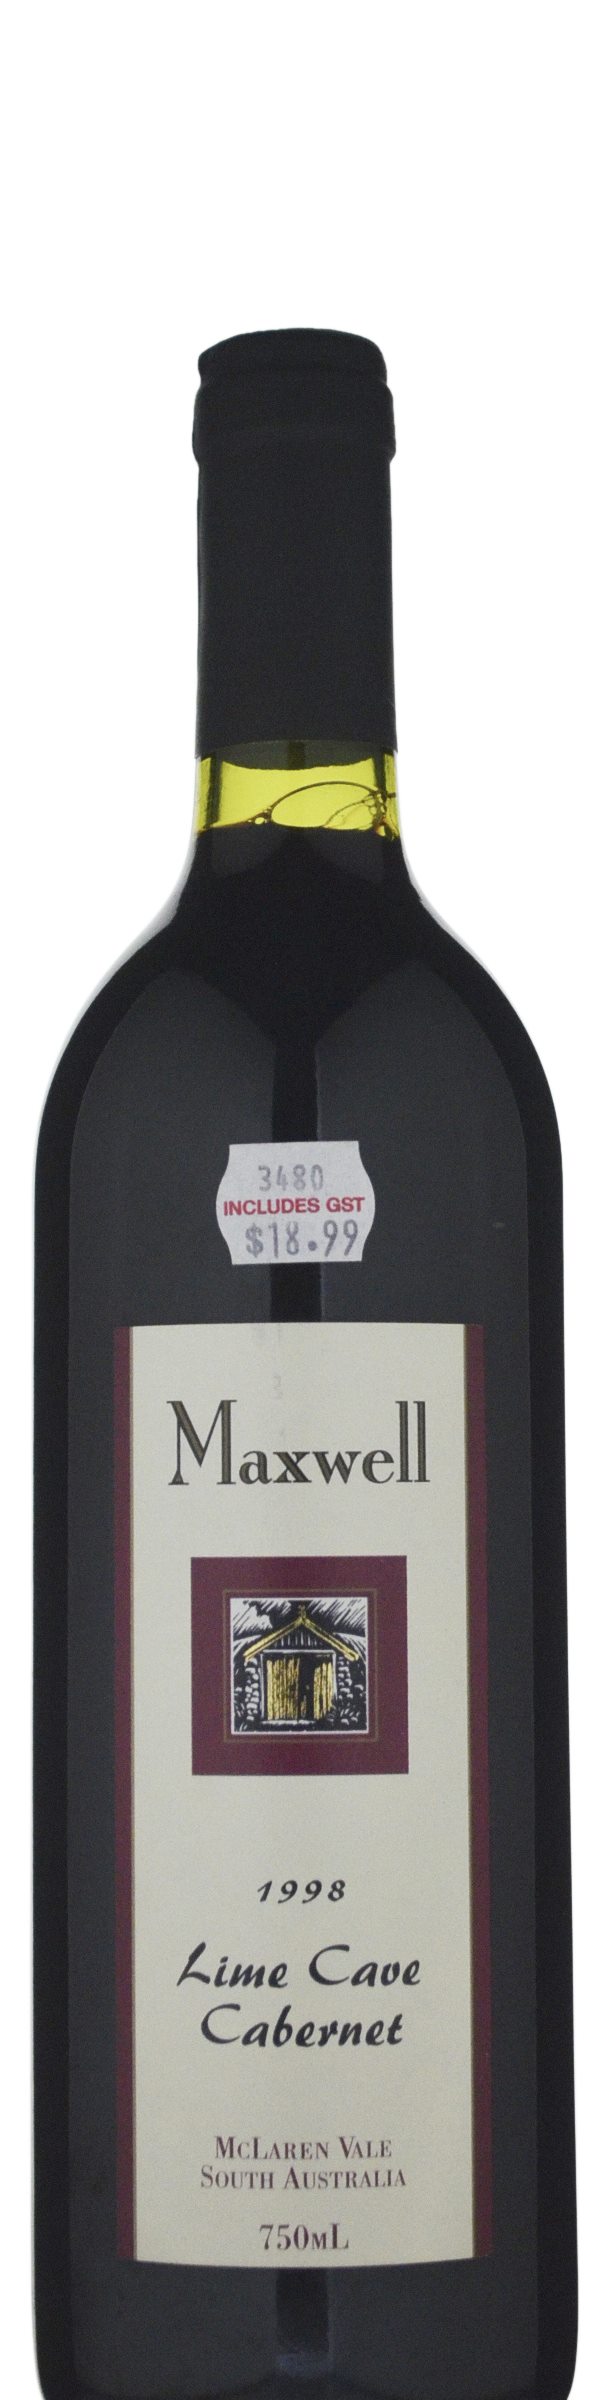 Maxwell Lime Cave Cabernet Sauvignon 1998